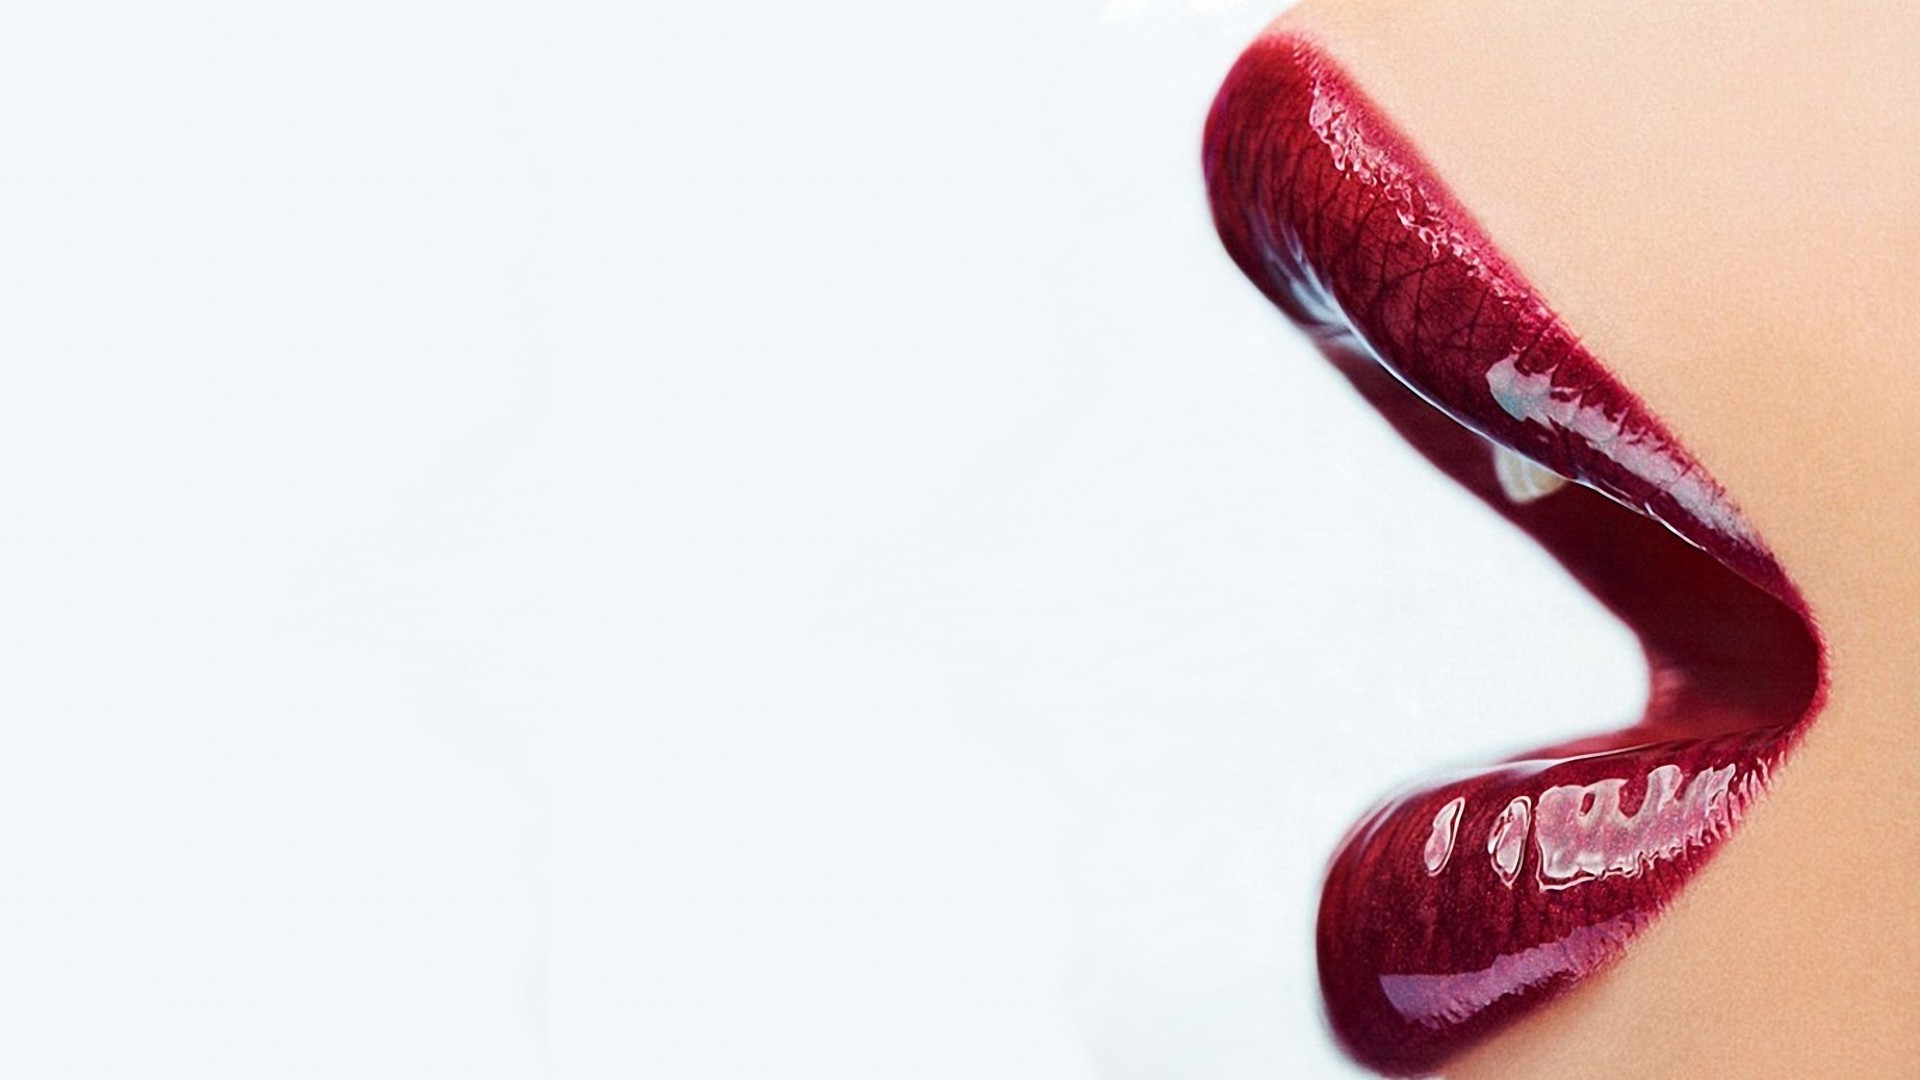 mouths, Closeup, Lipstick, Red Lipstick, Lips, Red Wallpaper